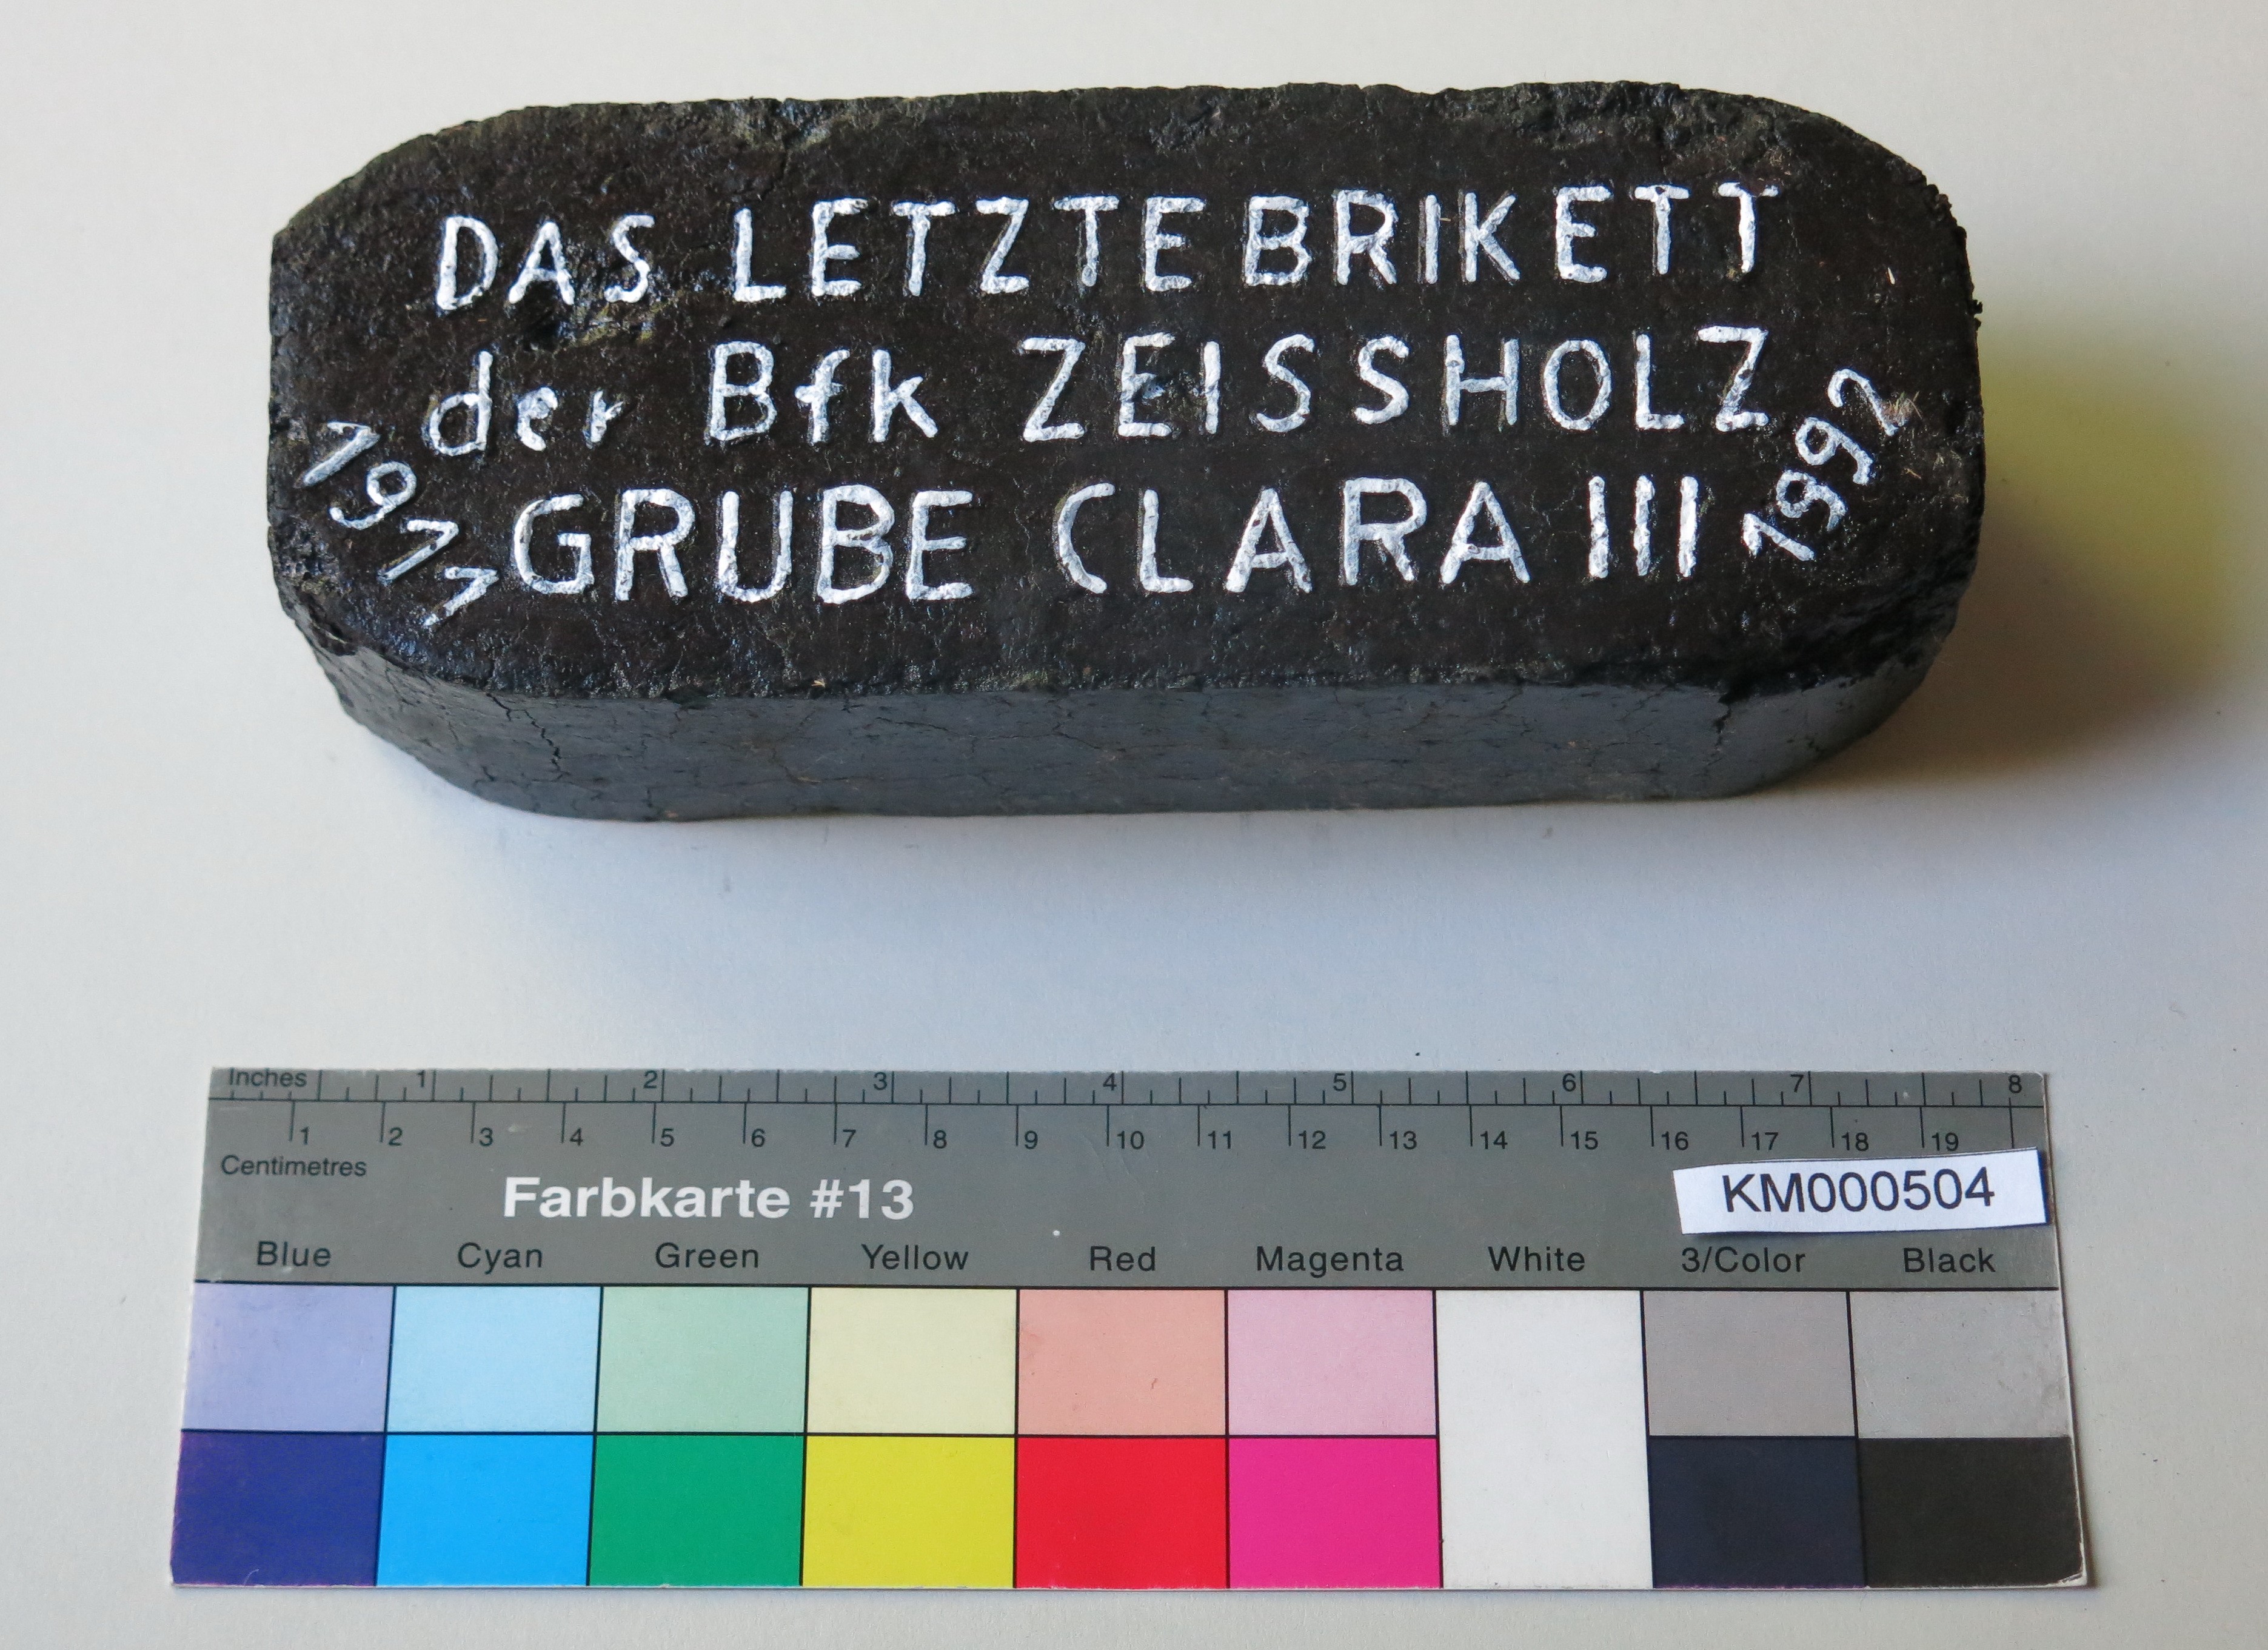 Zierbrikett "DAS LETZTE BRIKETT der BfK ZEISSHOLZ GRUBE CLARA III 1911 1992" (Energiefabrik Knappenrode CC BY-SA)